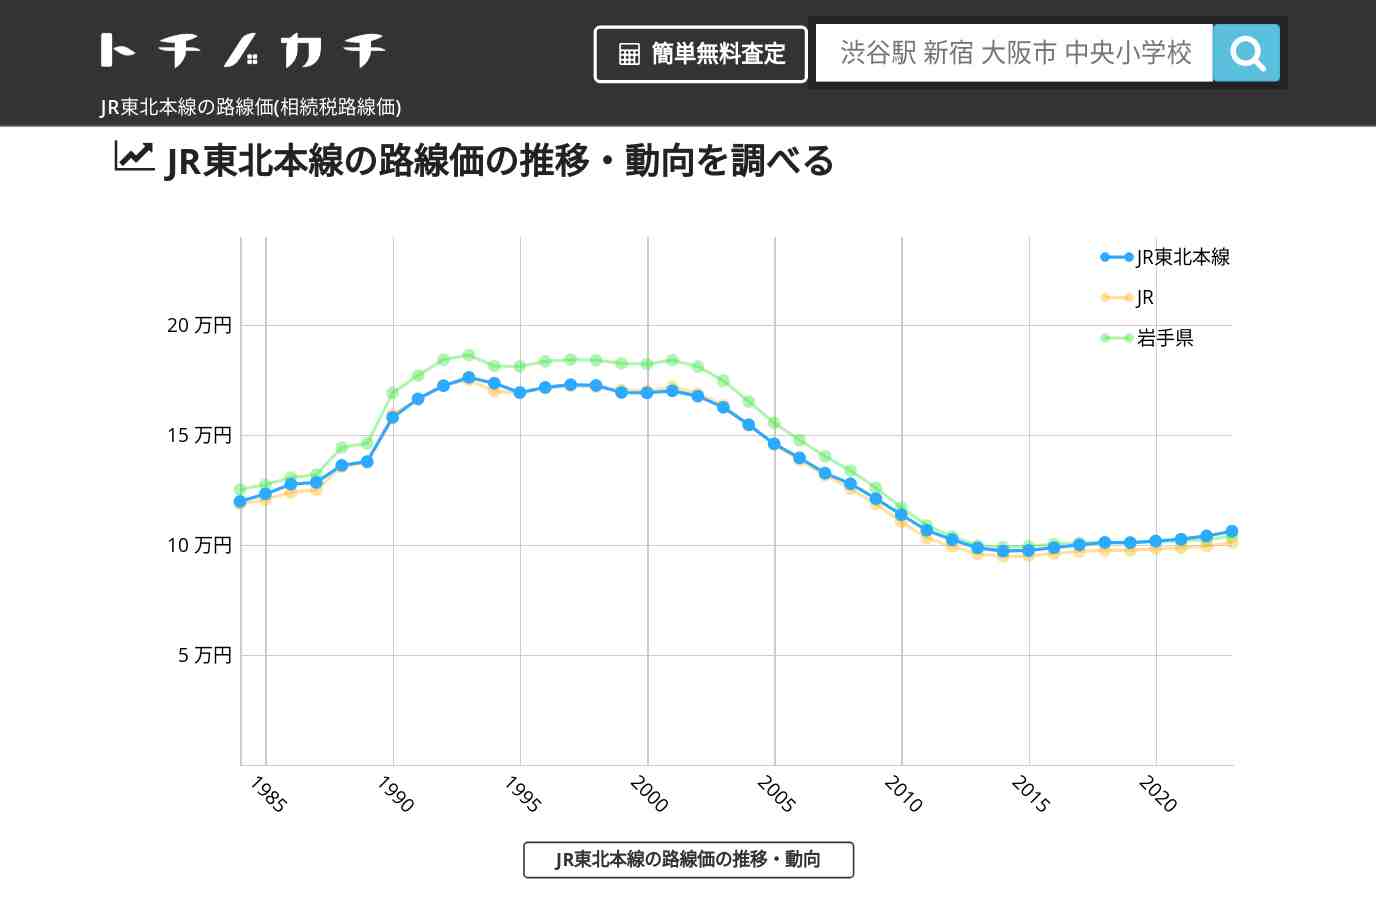 JR東北本線(JR)の路線価(相続税路線価) | トチノカチ